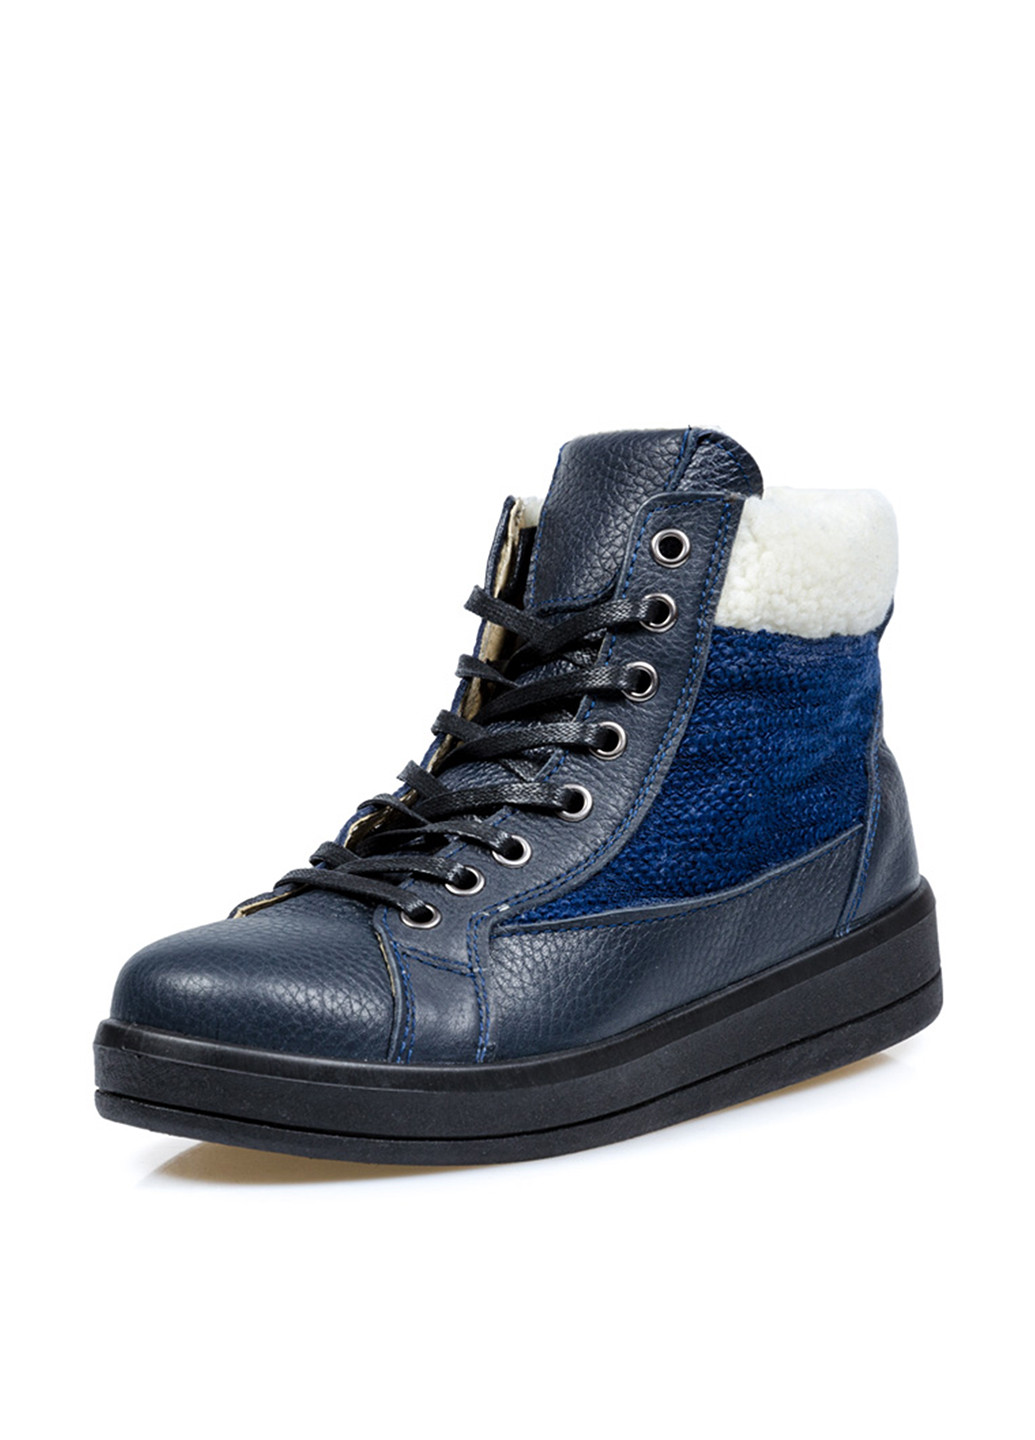 Темно-синие зимние ботинки берцы F'91